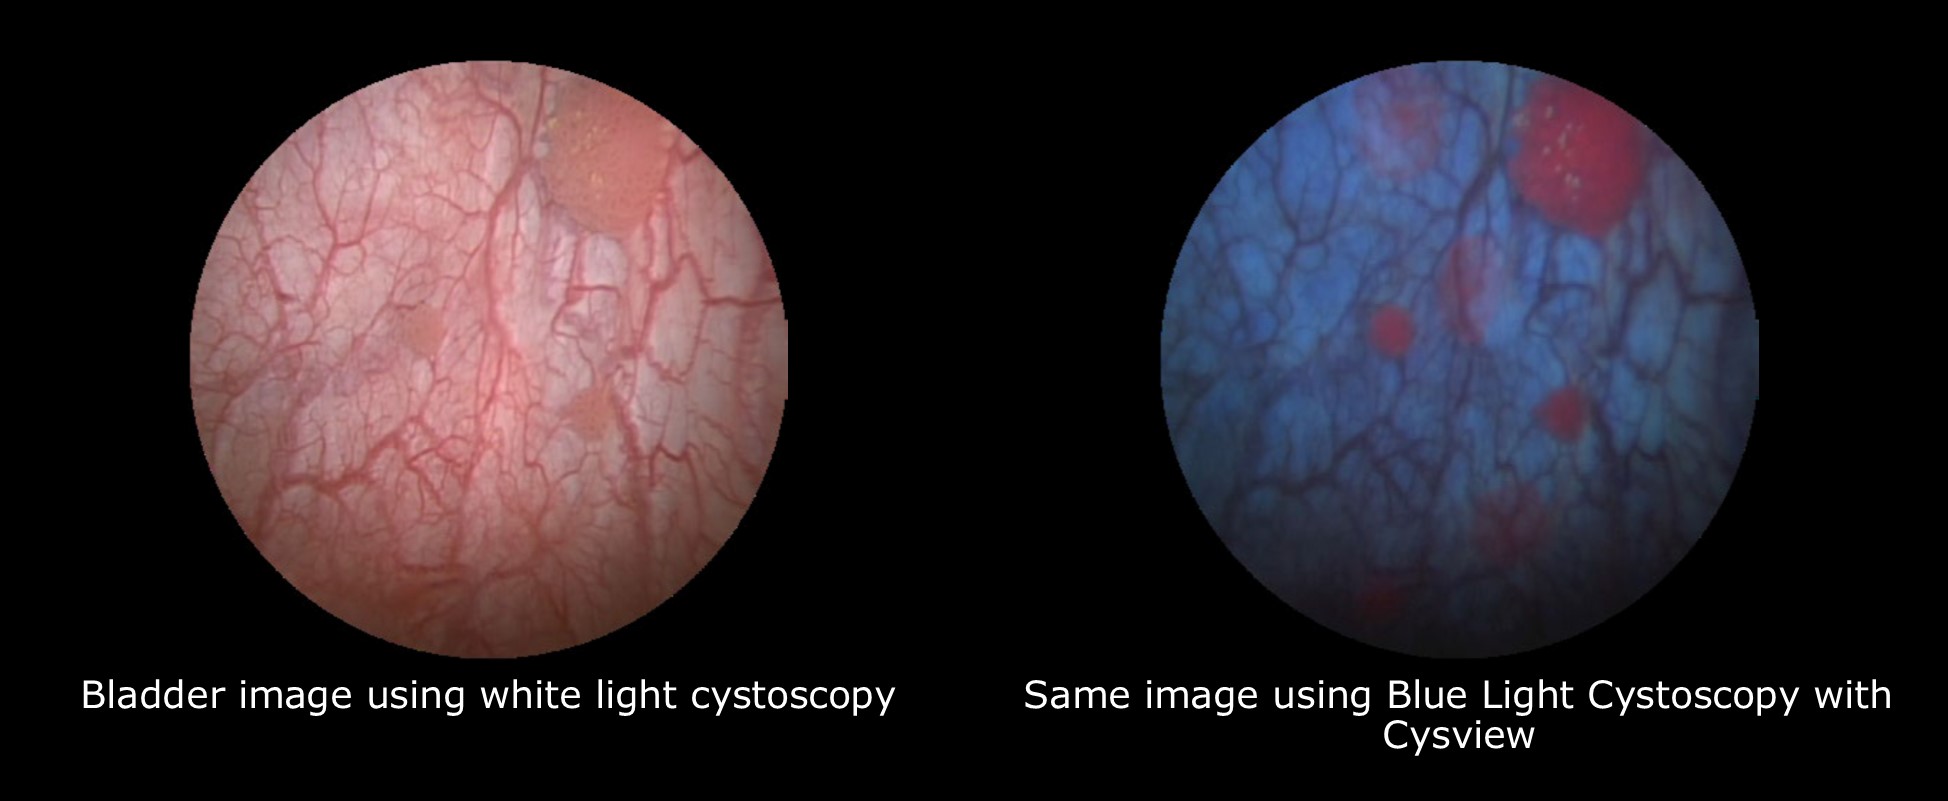 Blue Light Cystoscopy with Cysview